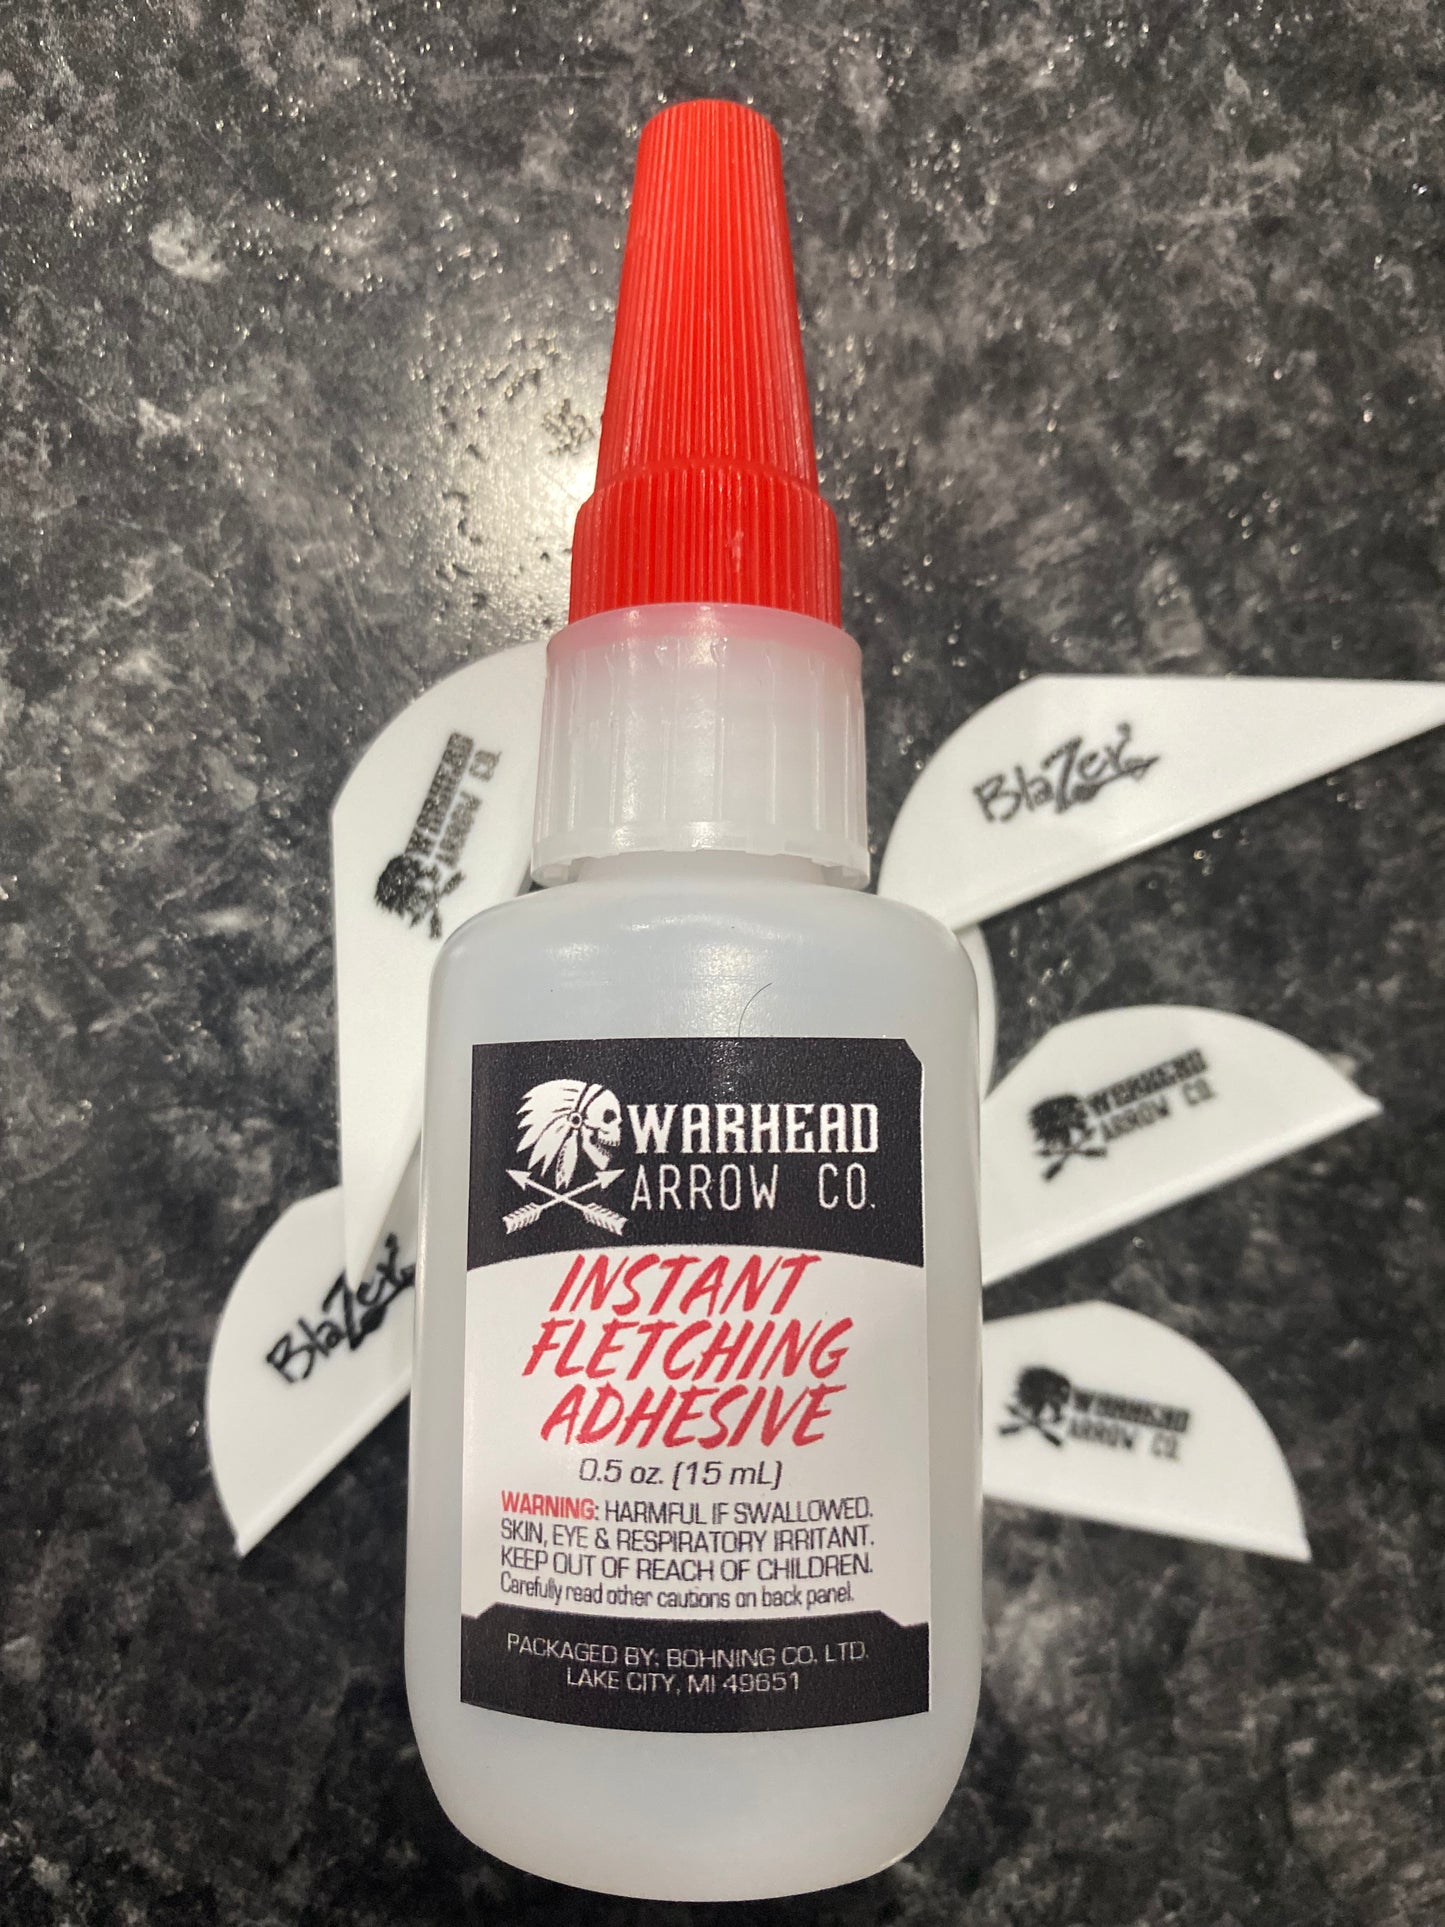 Warhead Arrow Co. Instant Fletching Adhesive 0.5 oz